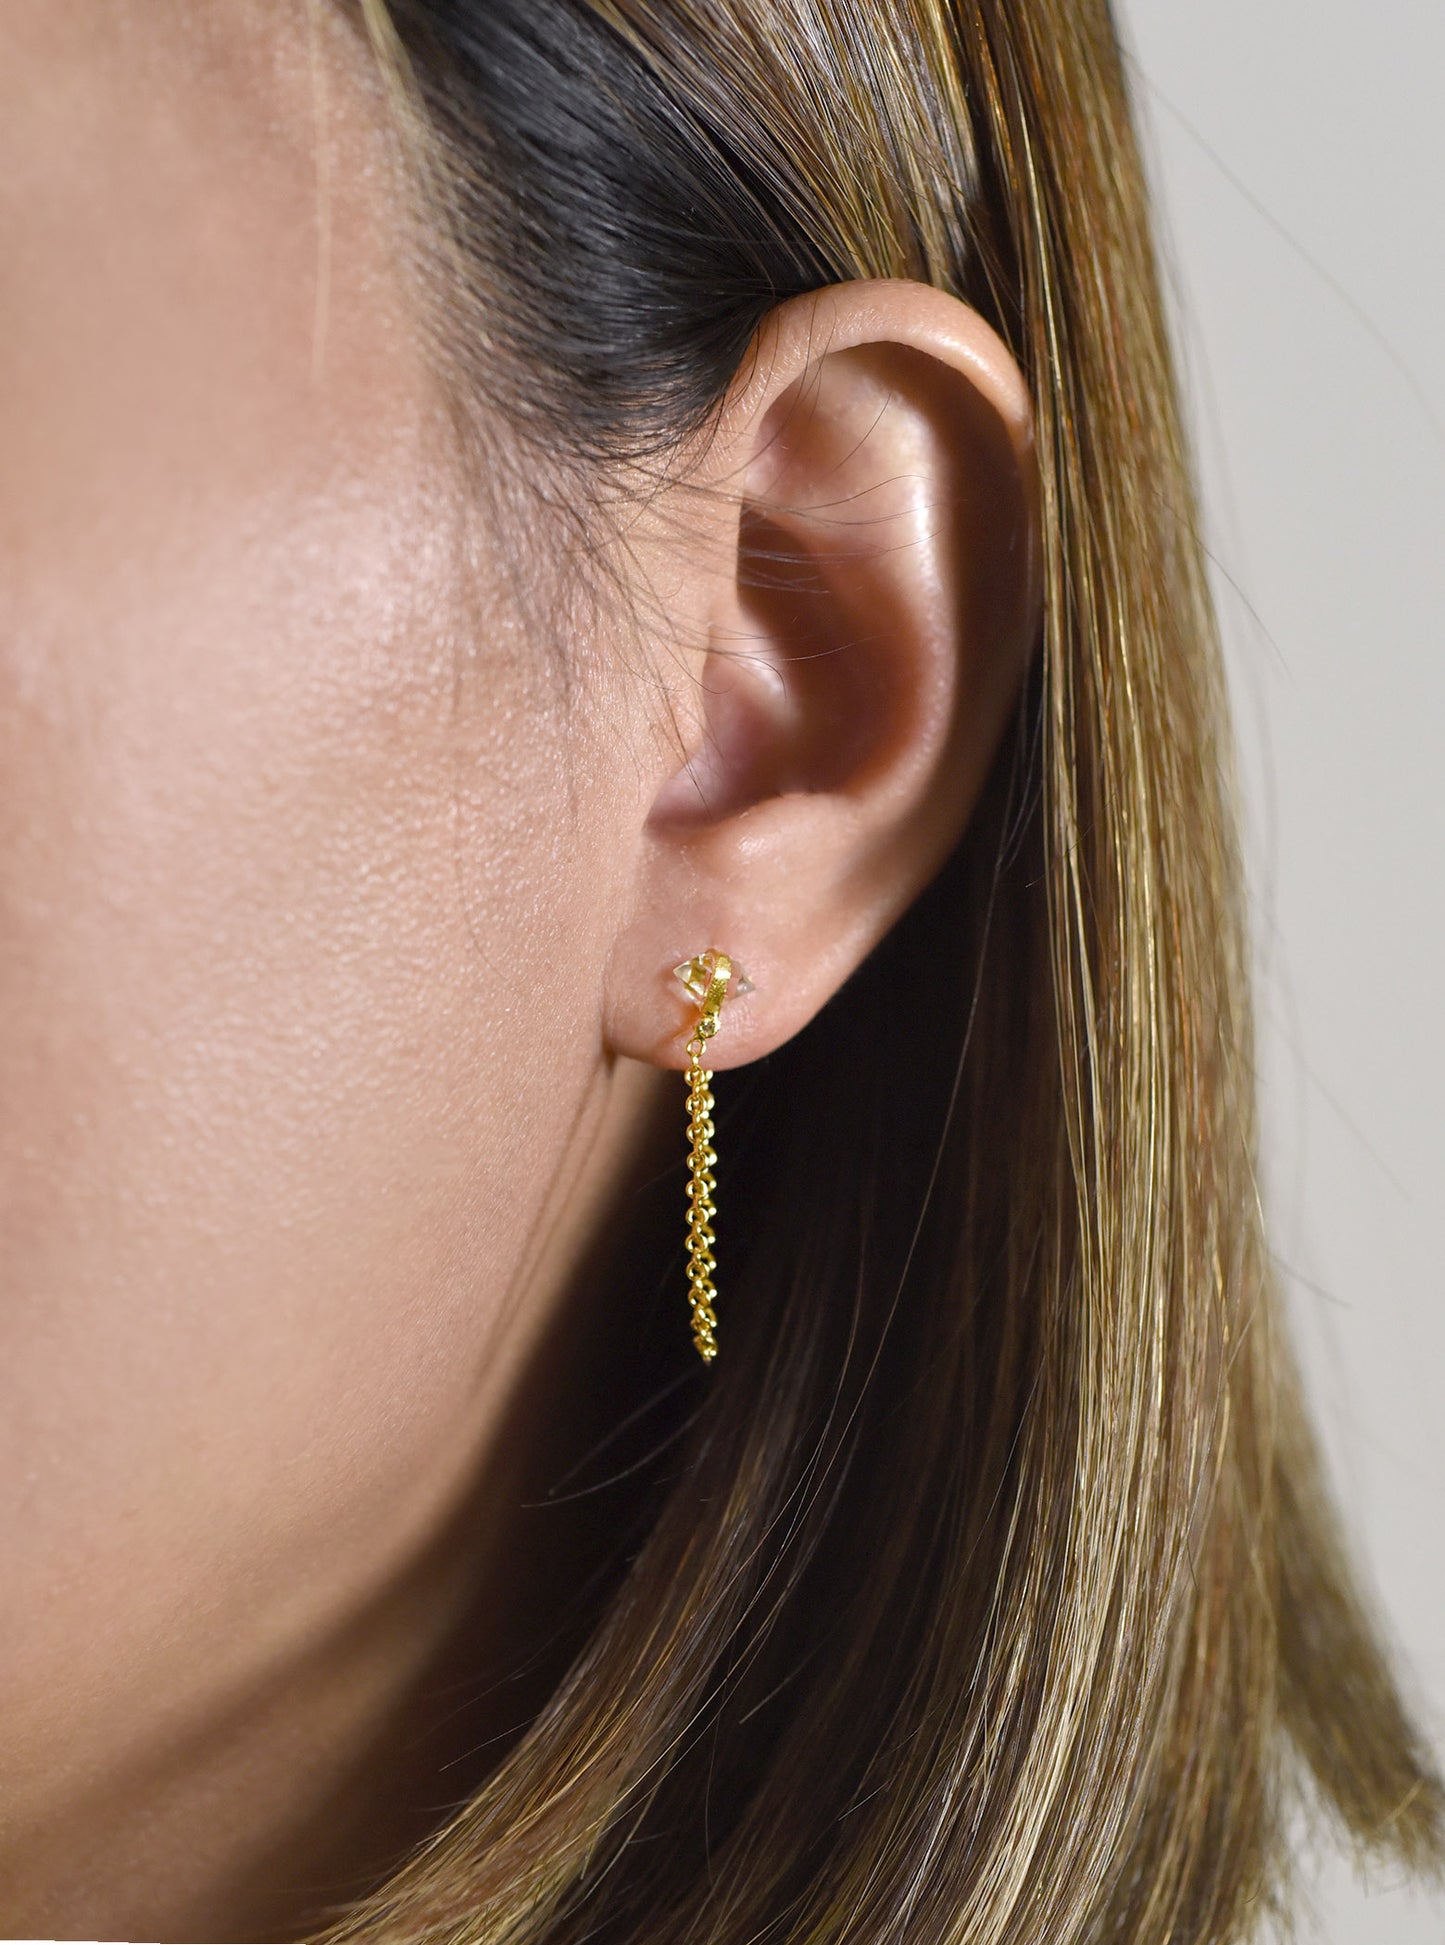 Herkimer Diamond Drop Chain with Diamond Earrings